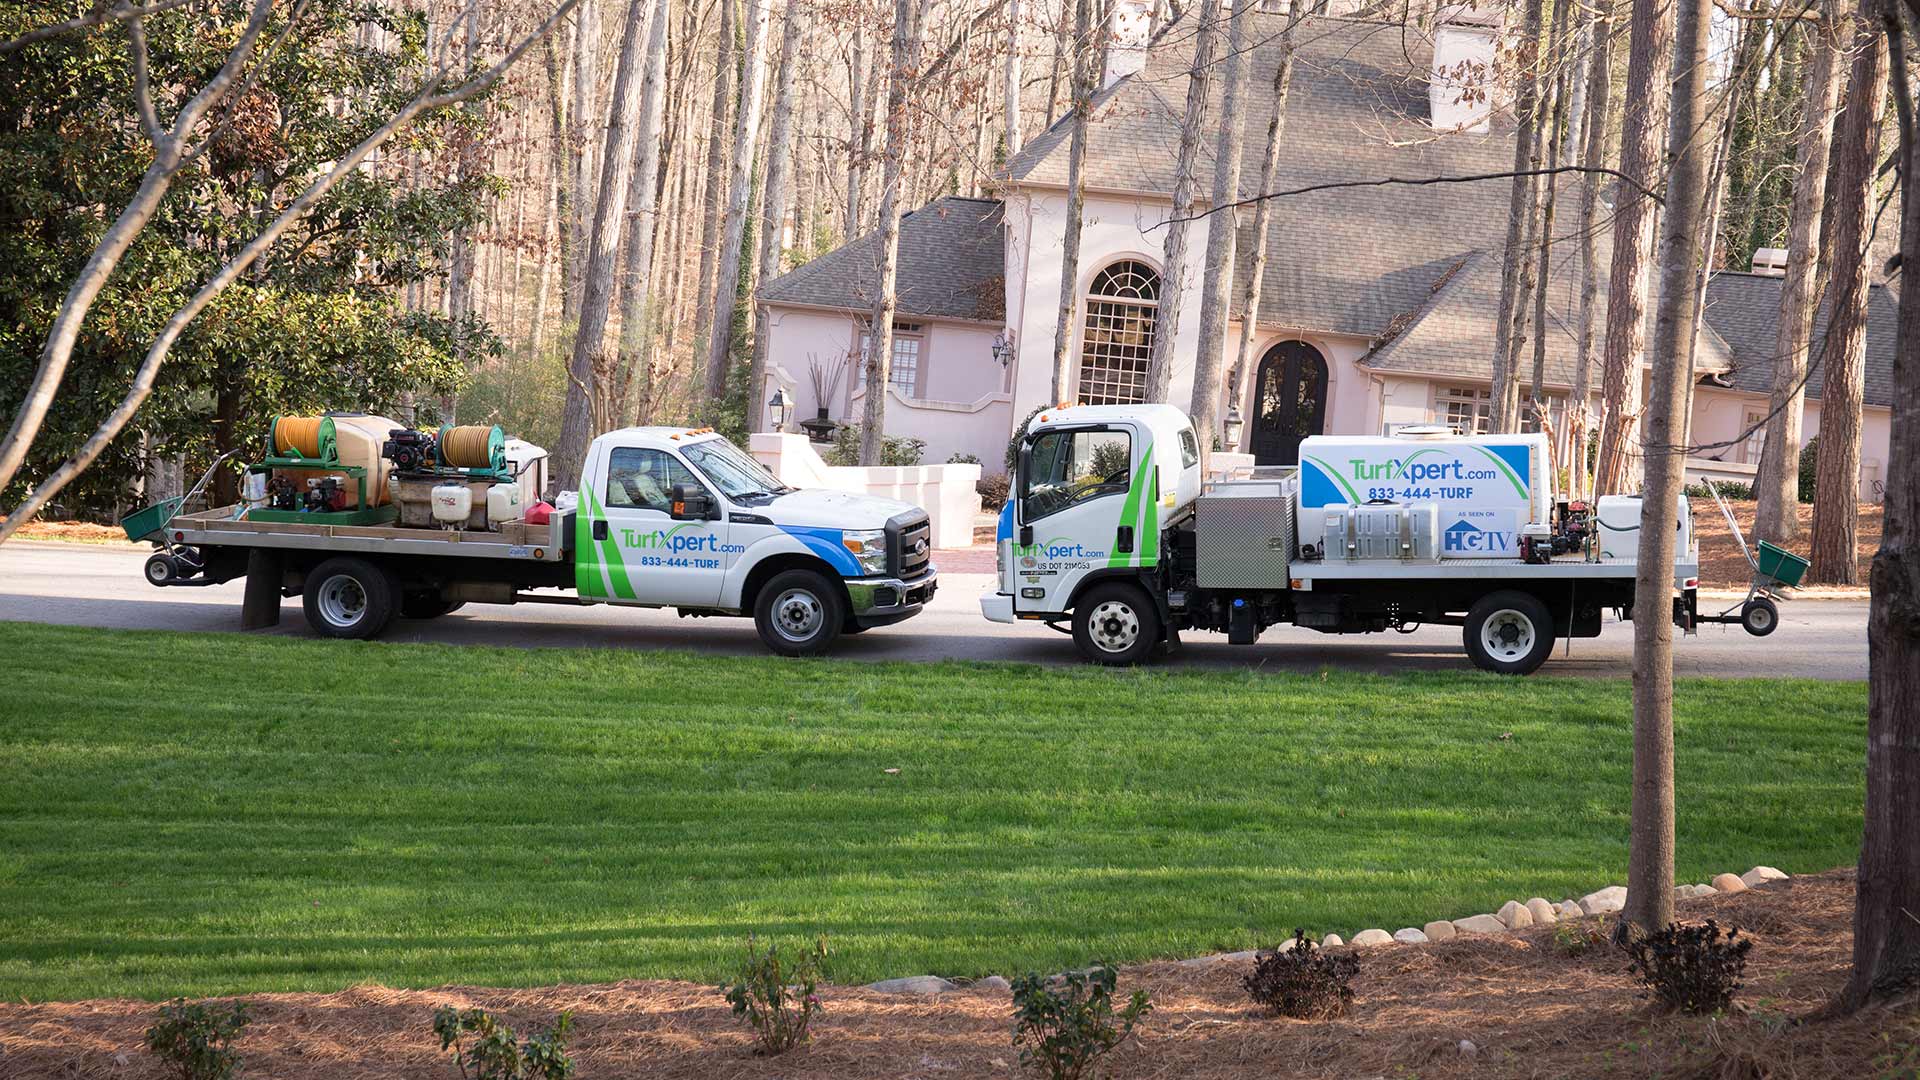 TurfXpert work crew providing lawn care to a home in Cumming, GA.